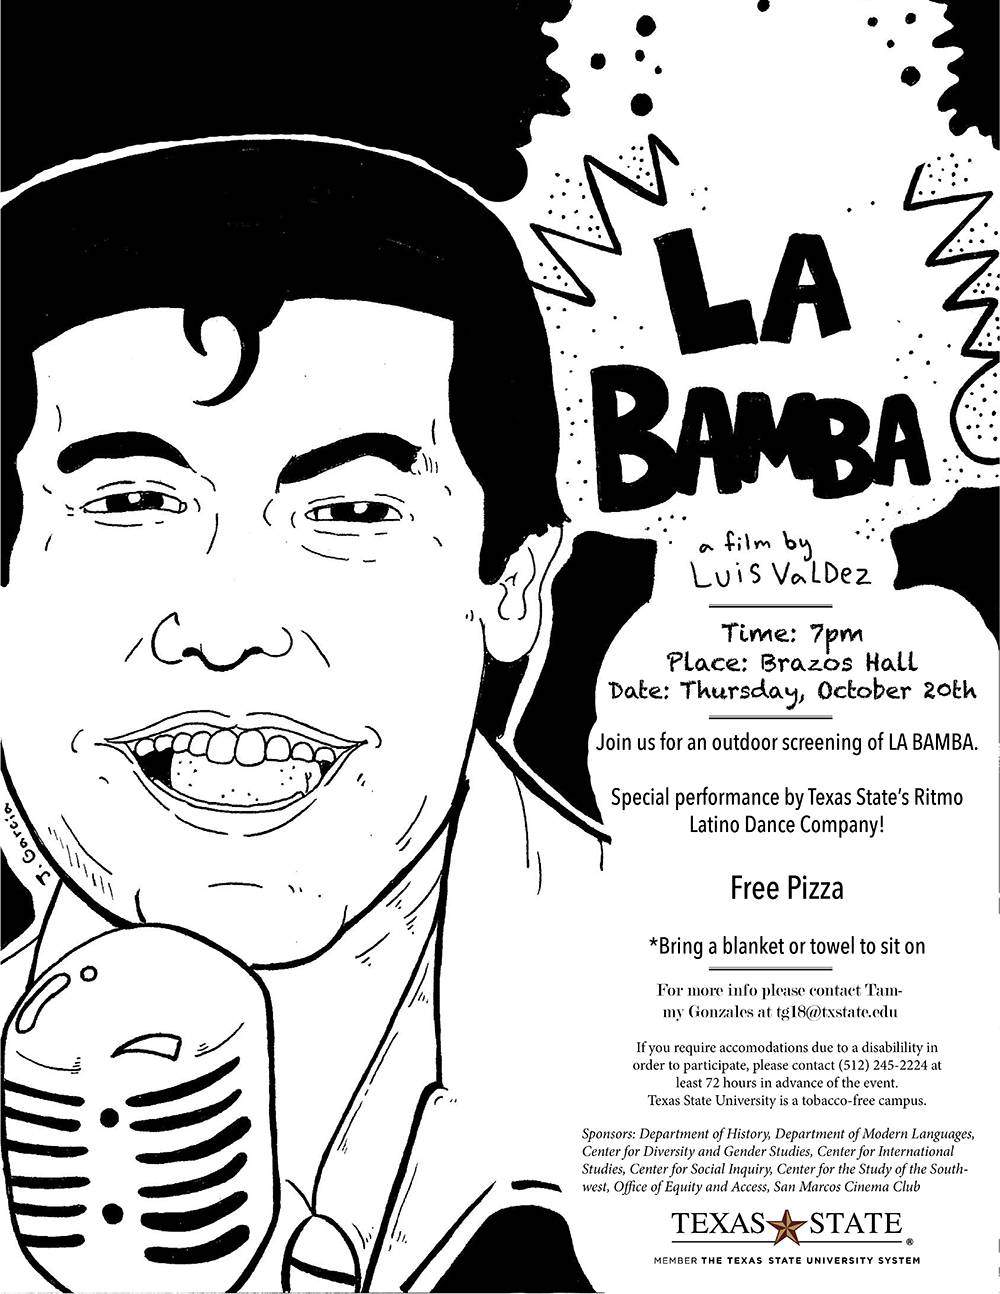 La Bamba Film Night Flier